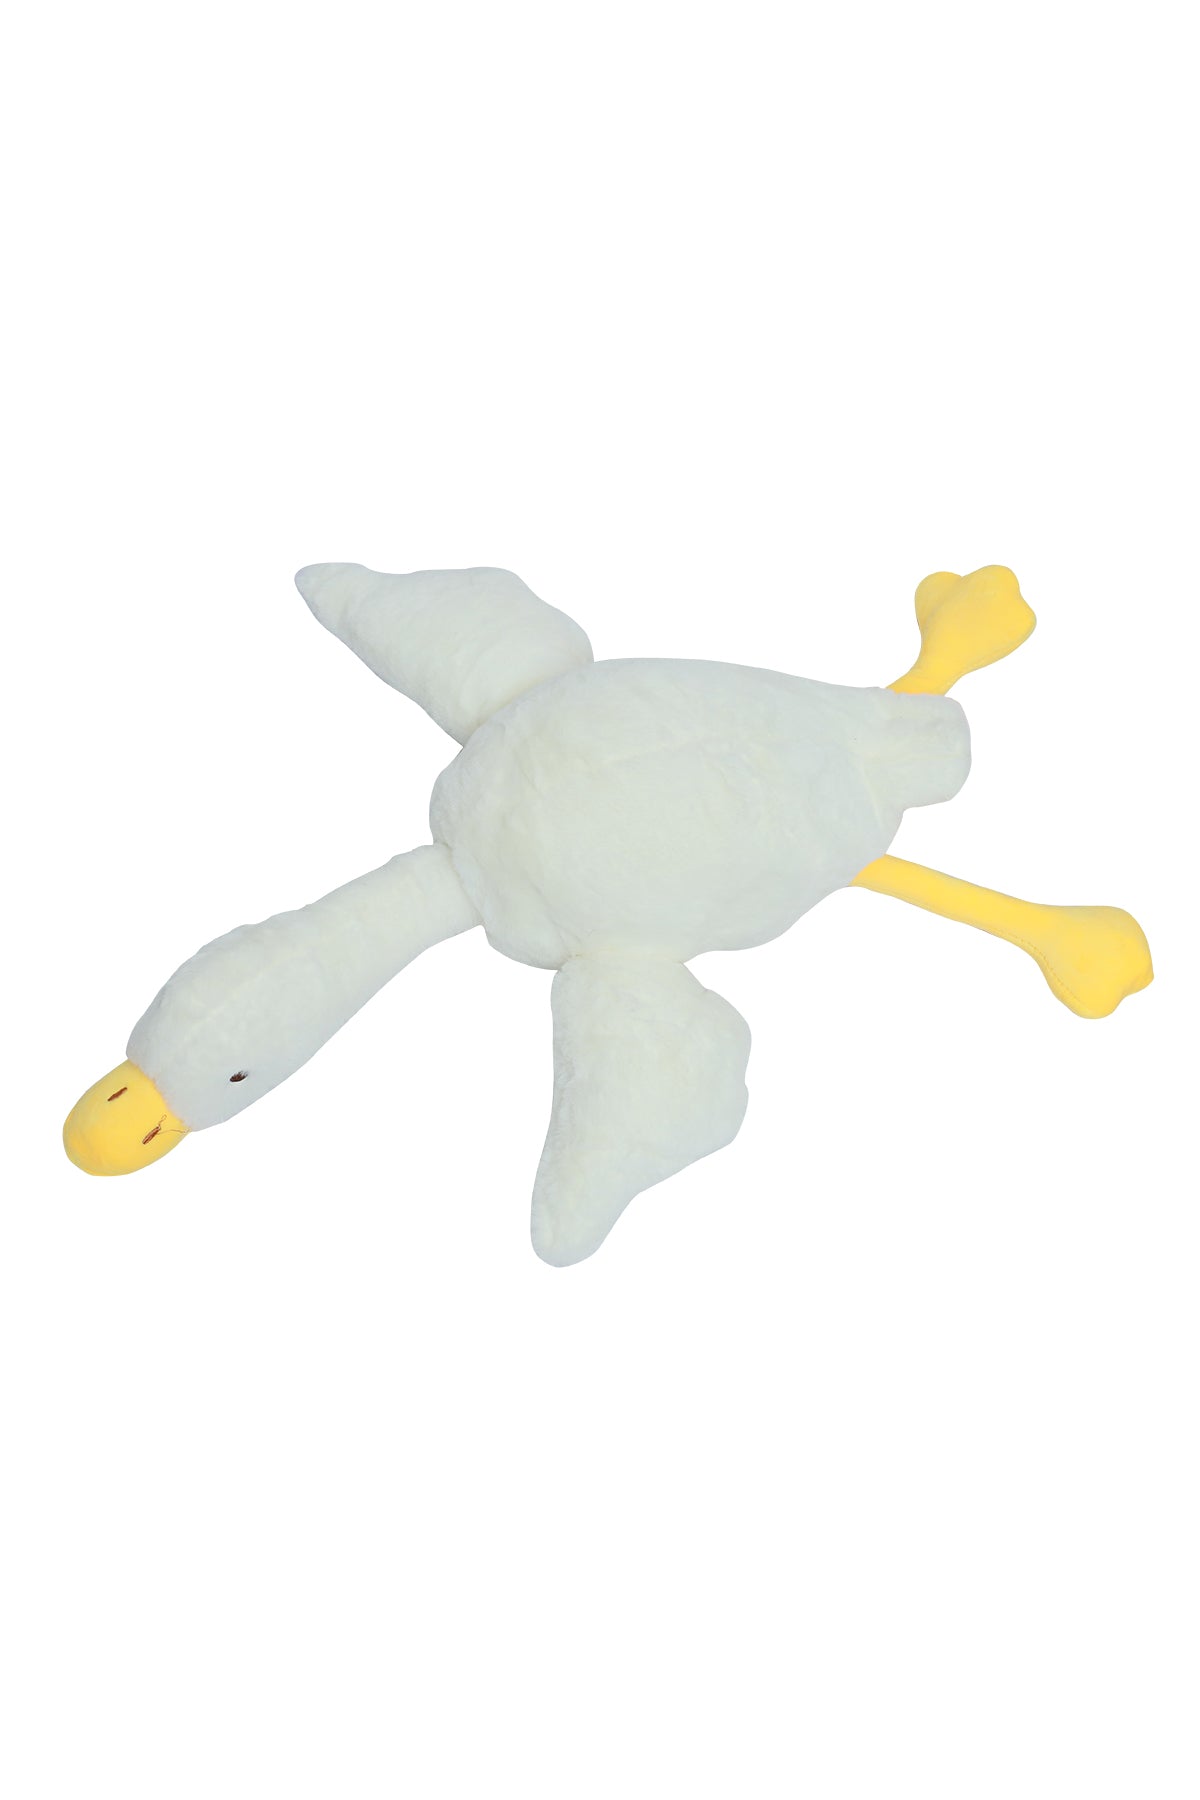 Stuffed Soft Duck Toy